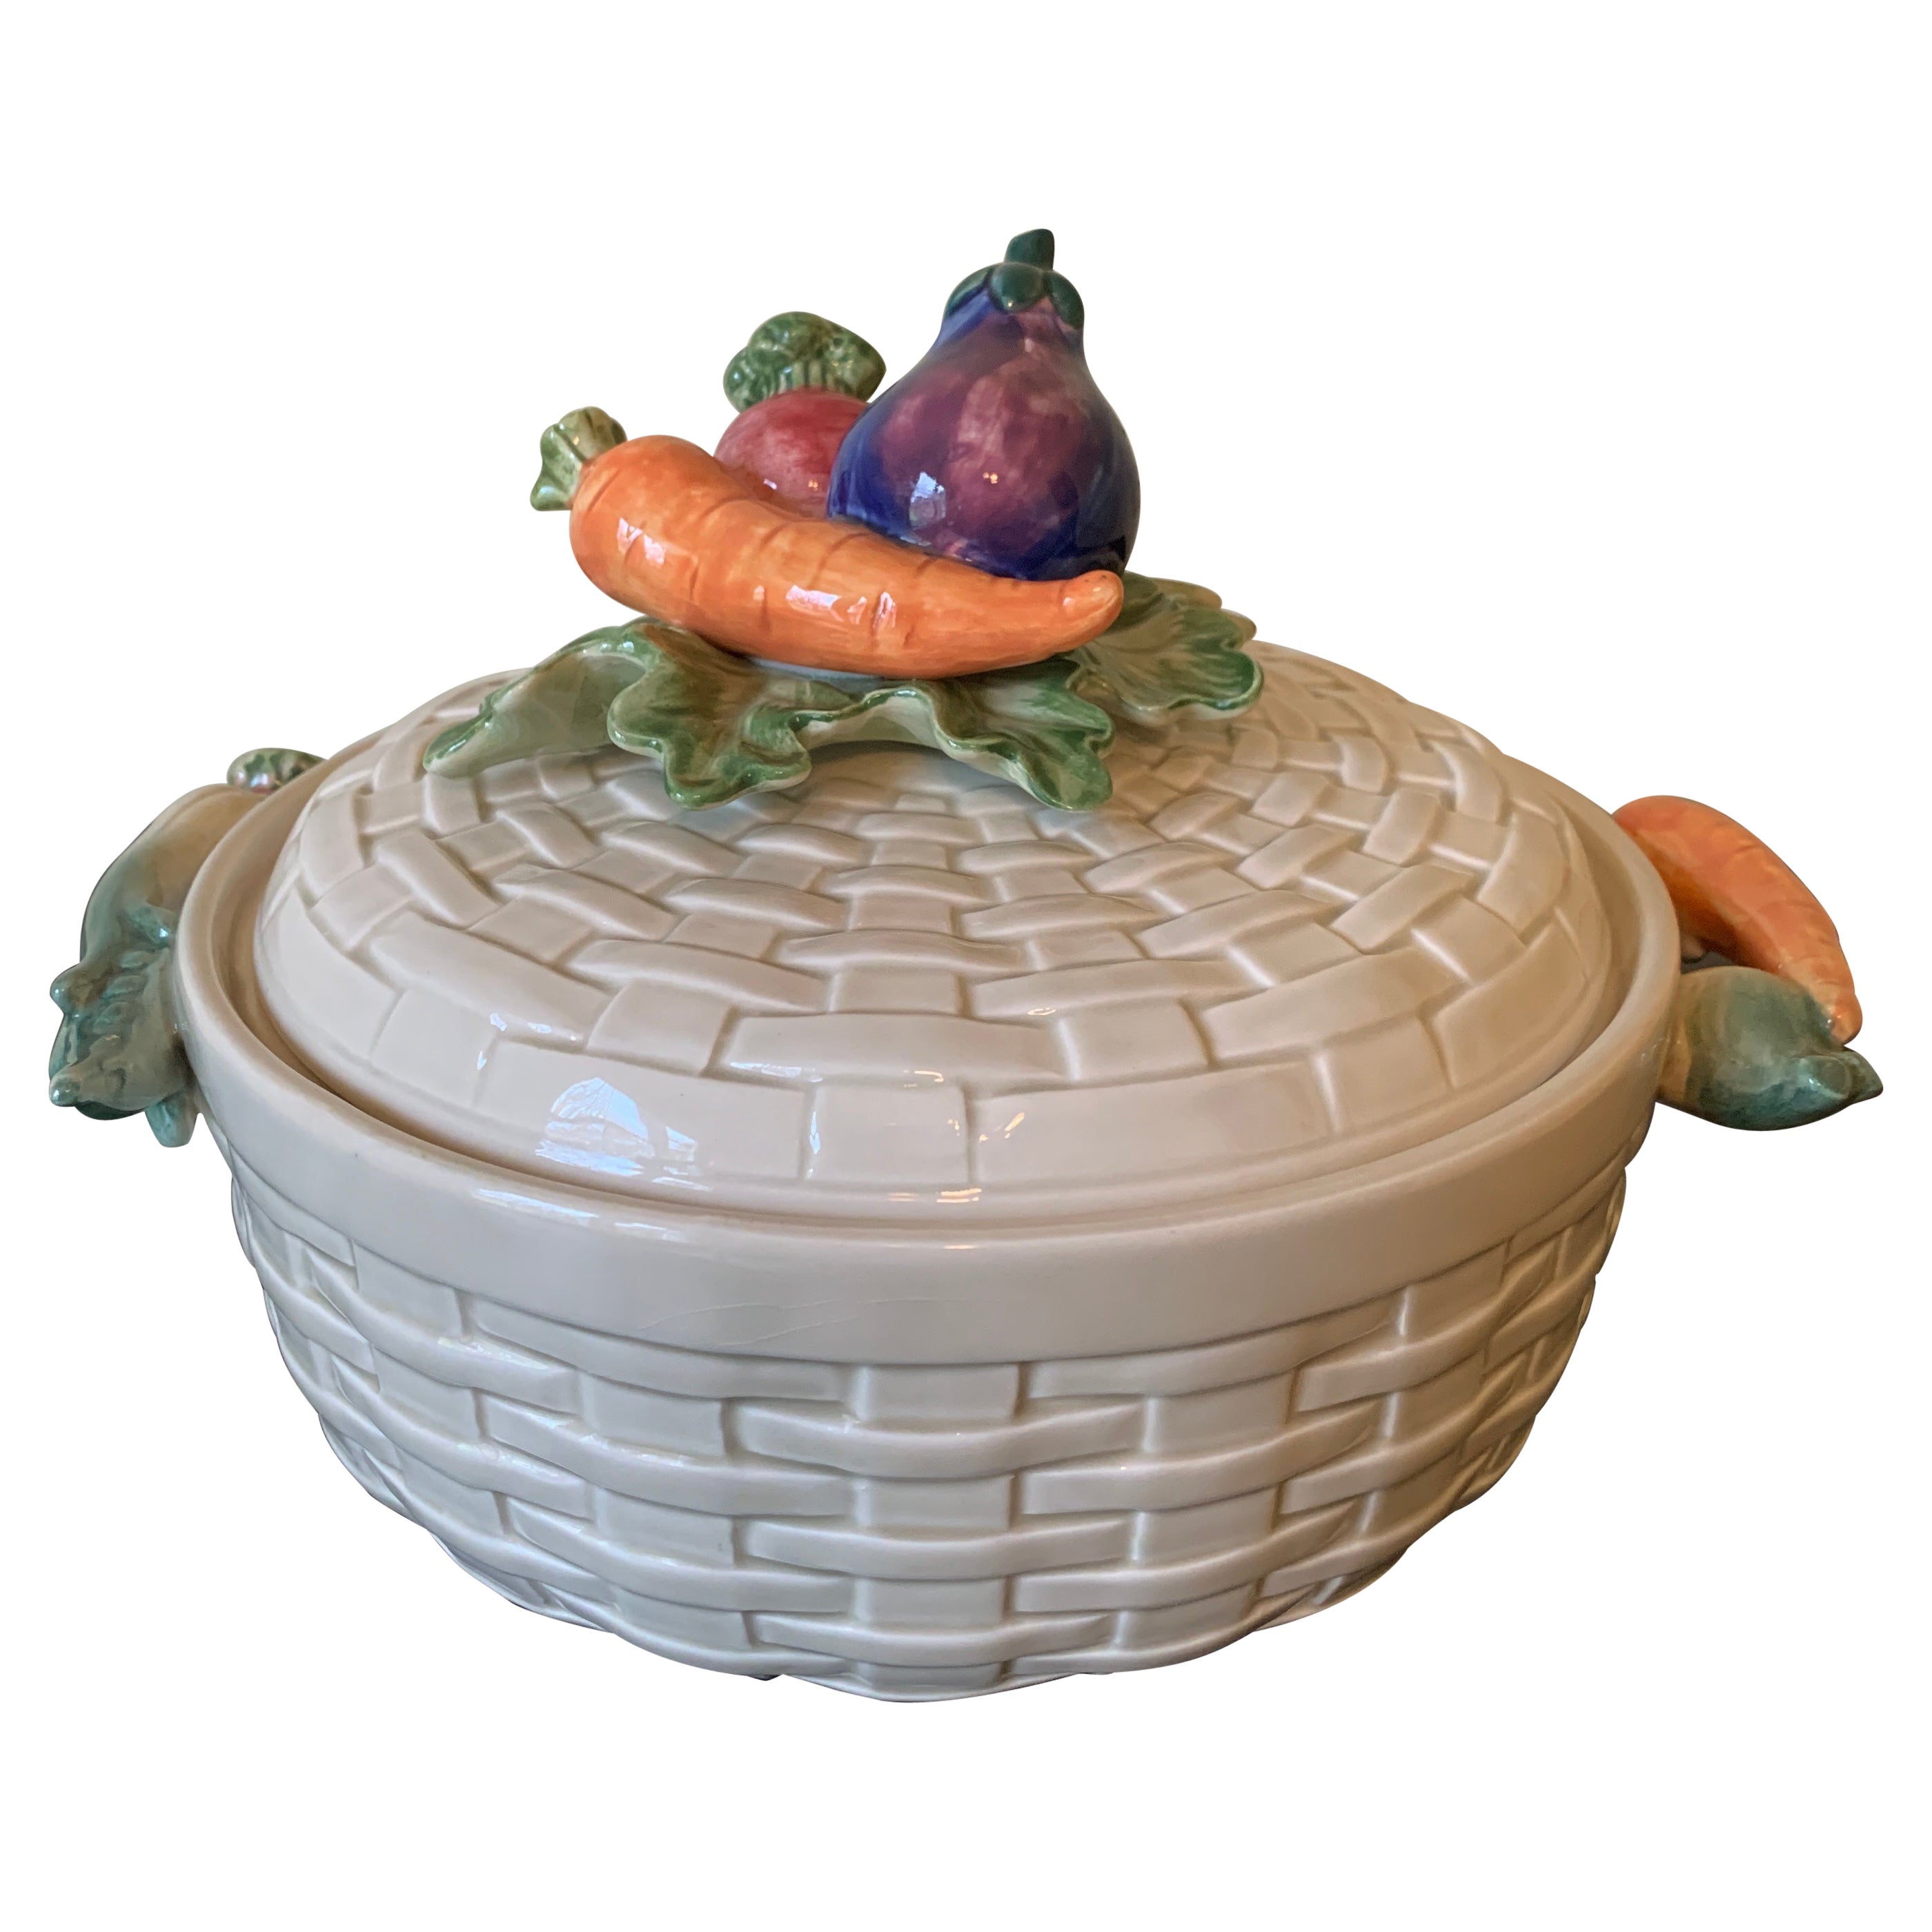 Fitz & Floyd Glazed Ceramic Trompe l'Oeil Woven Basket With Vegetables Casserole For Sale